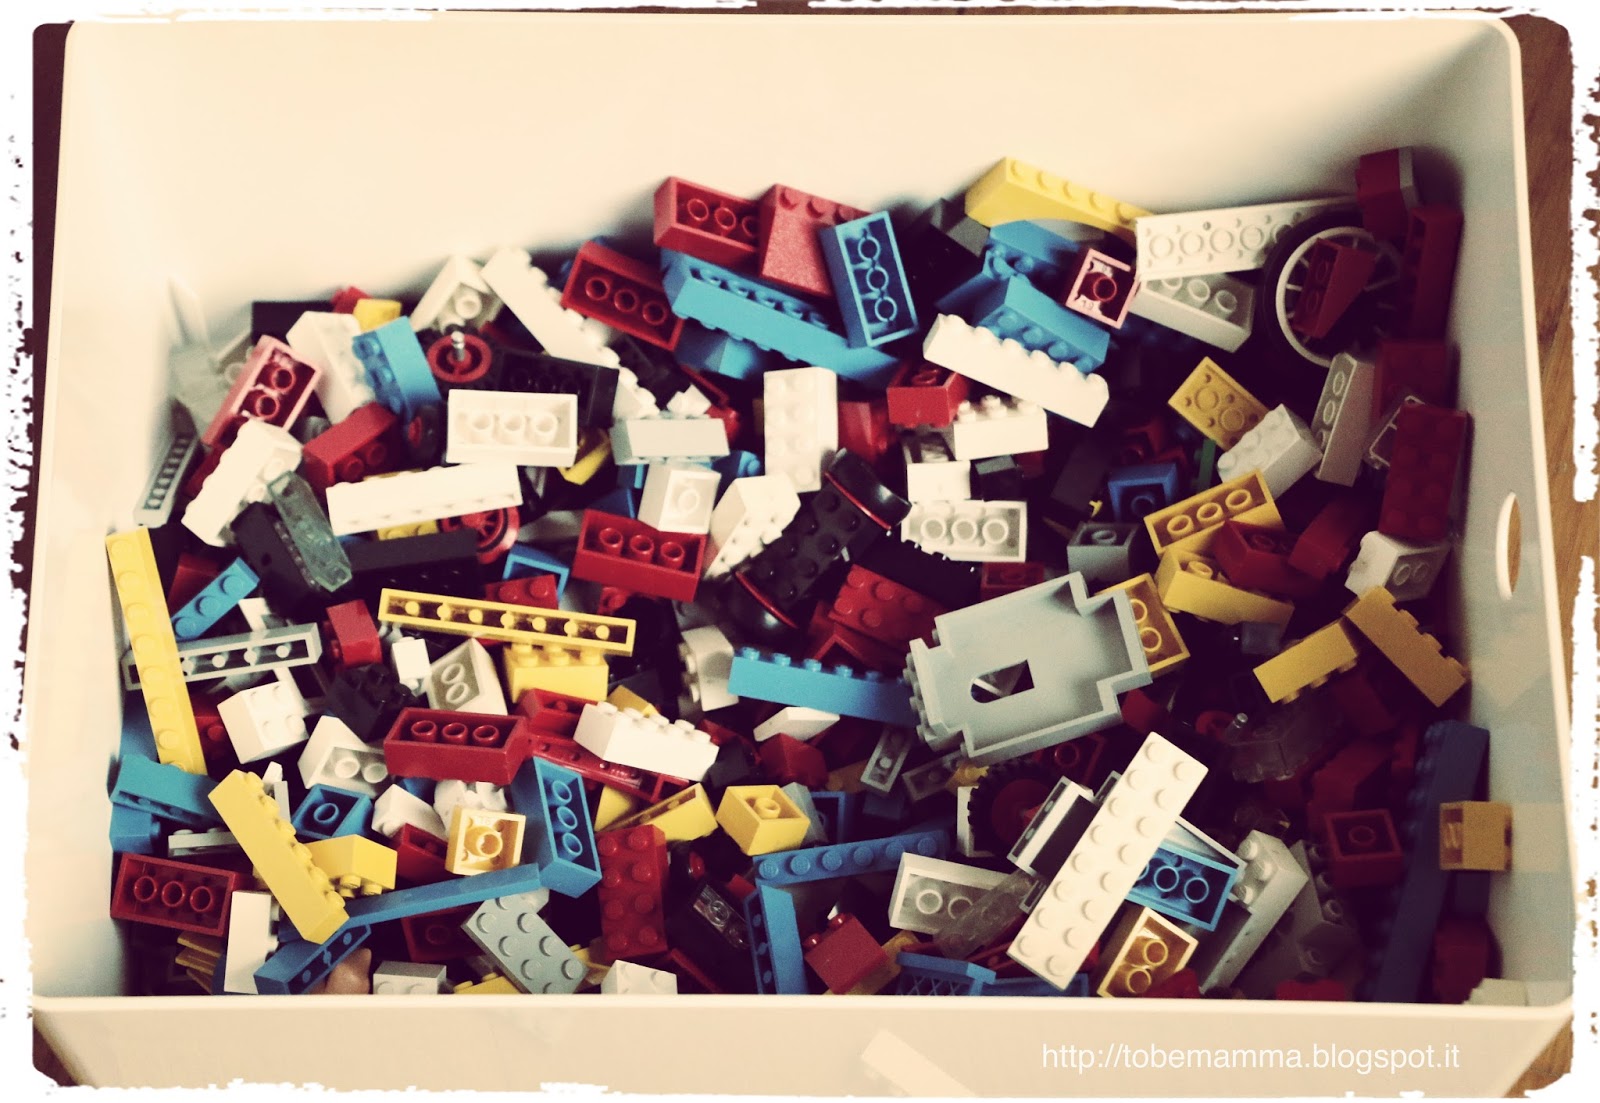 ToBeMamma: Lego Table fai da te